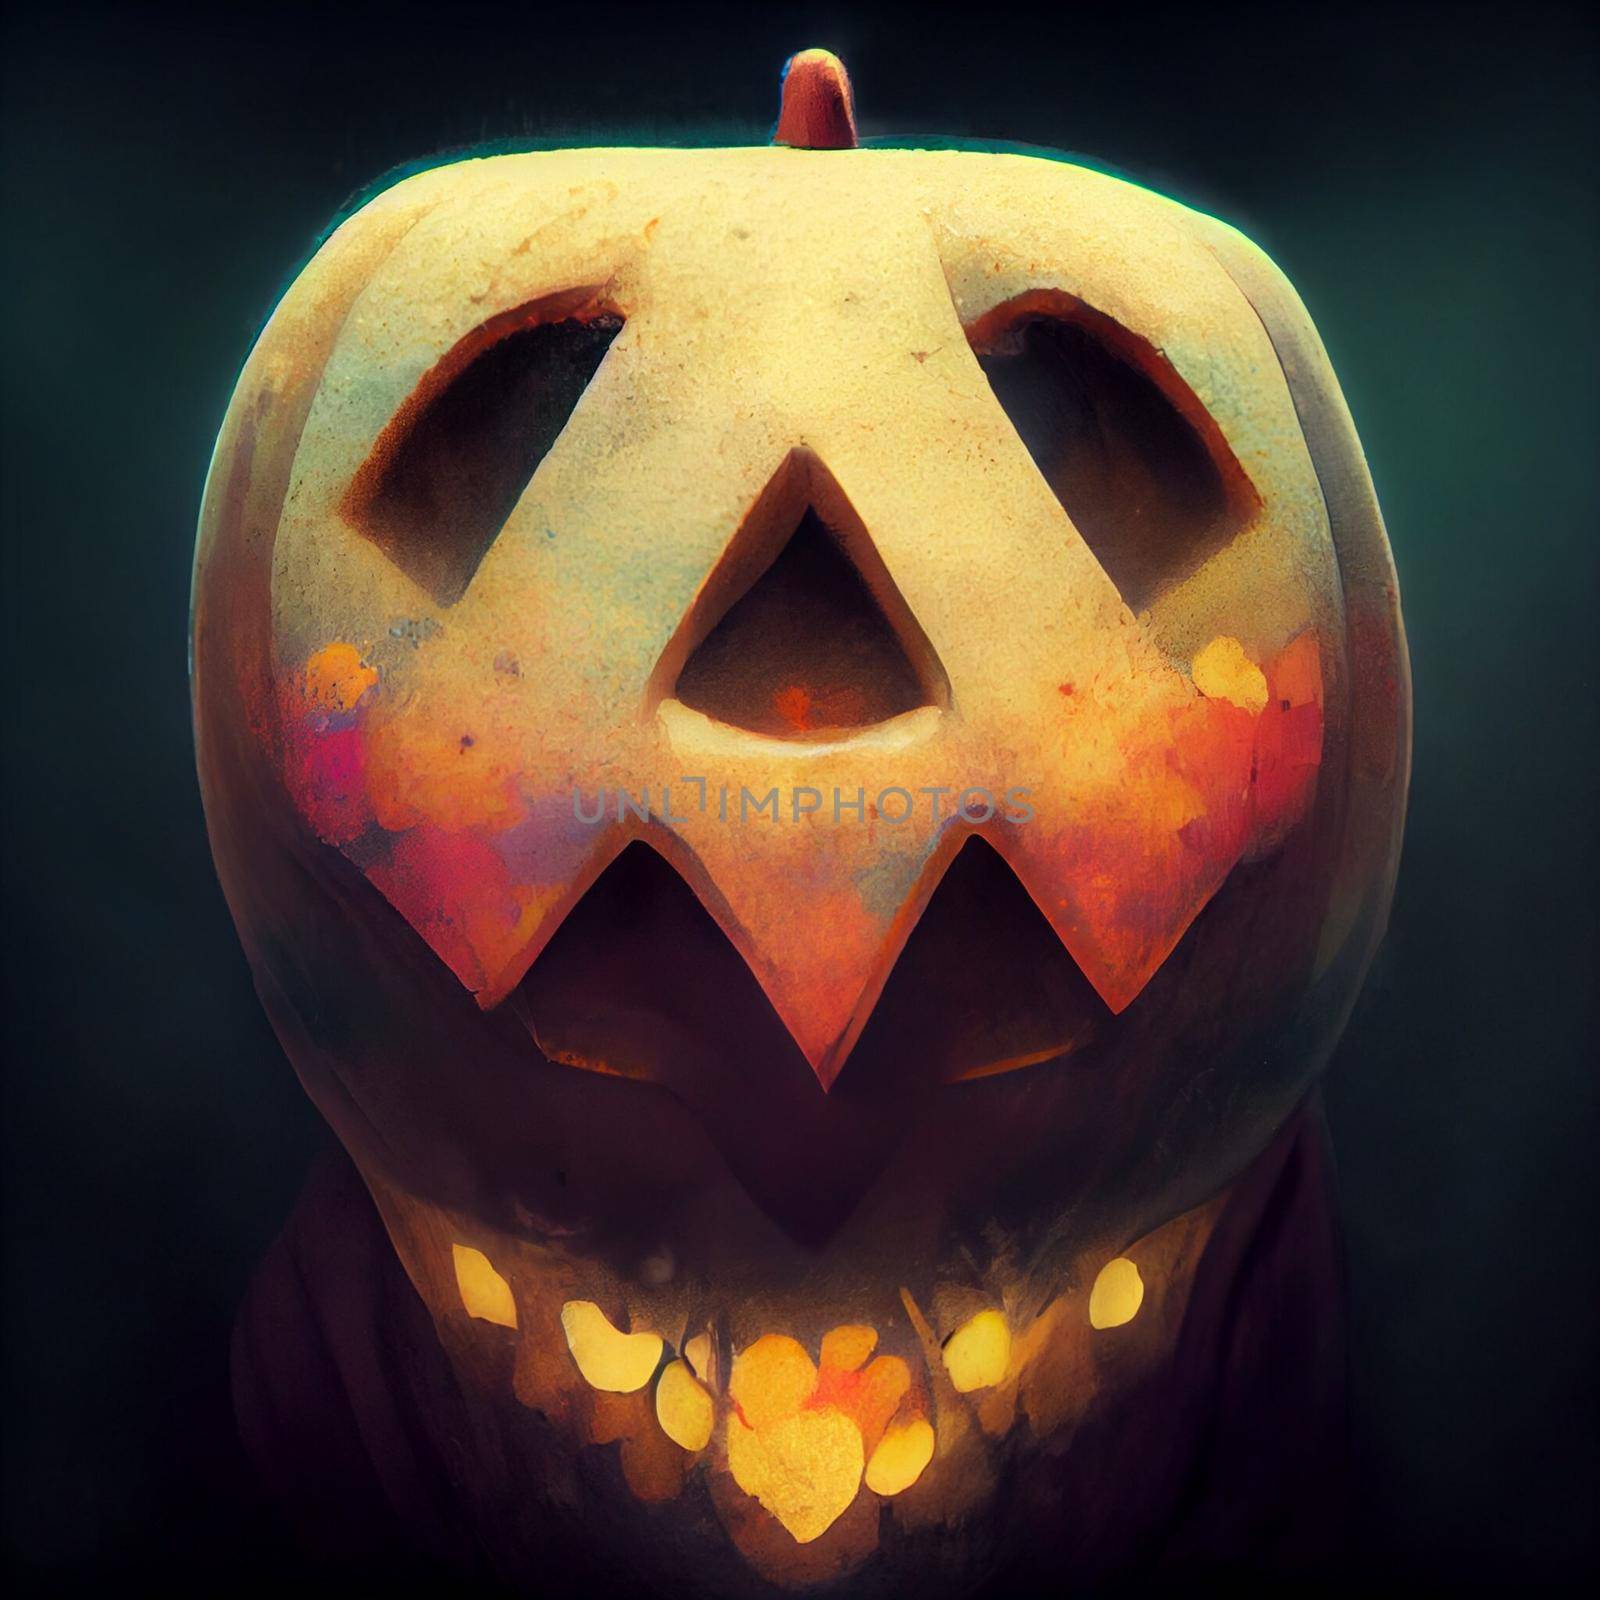 Cartoon illustration of a sinister Halloween pumpkin by NeuroSky